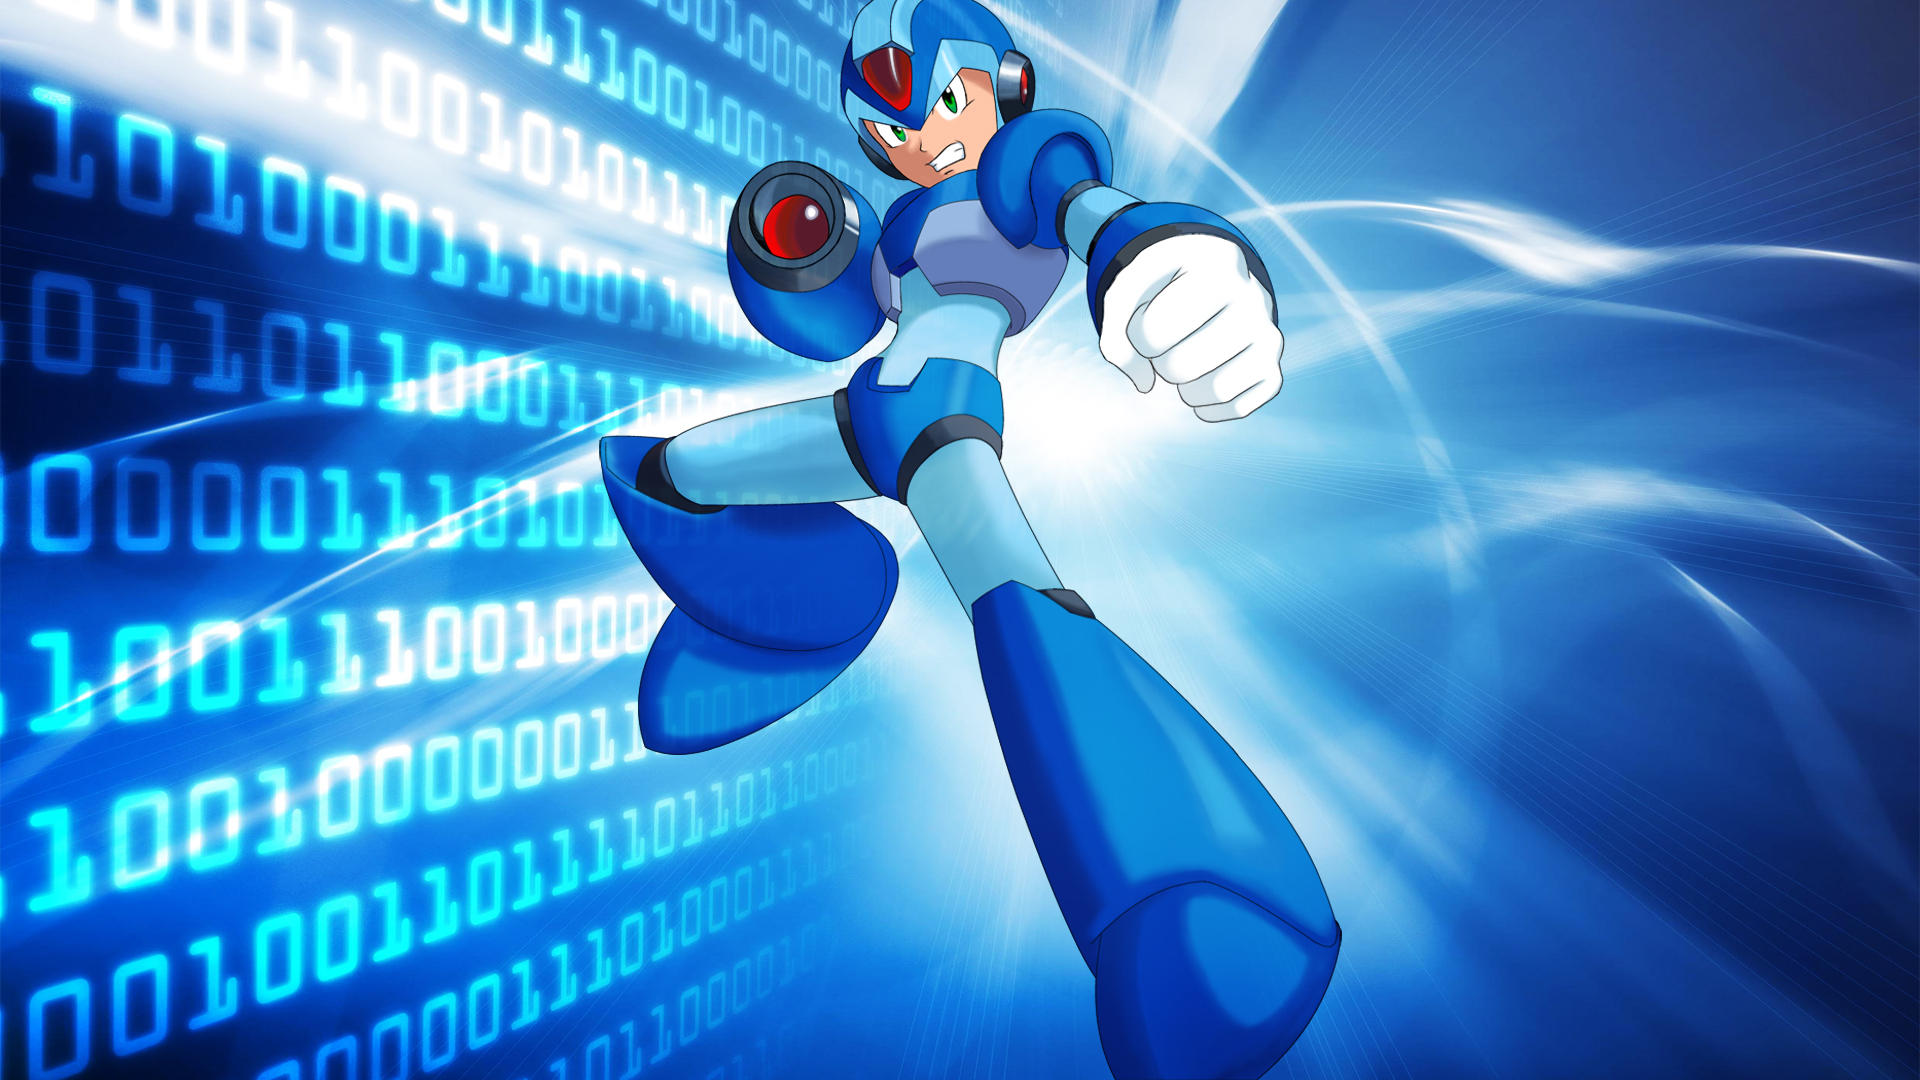 Mega Man X Background 1920x1080 by PookandPie on DeviantArt